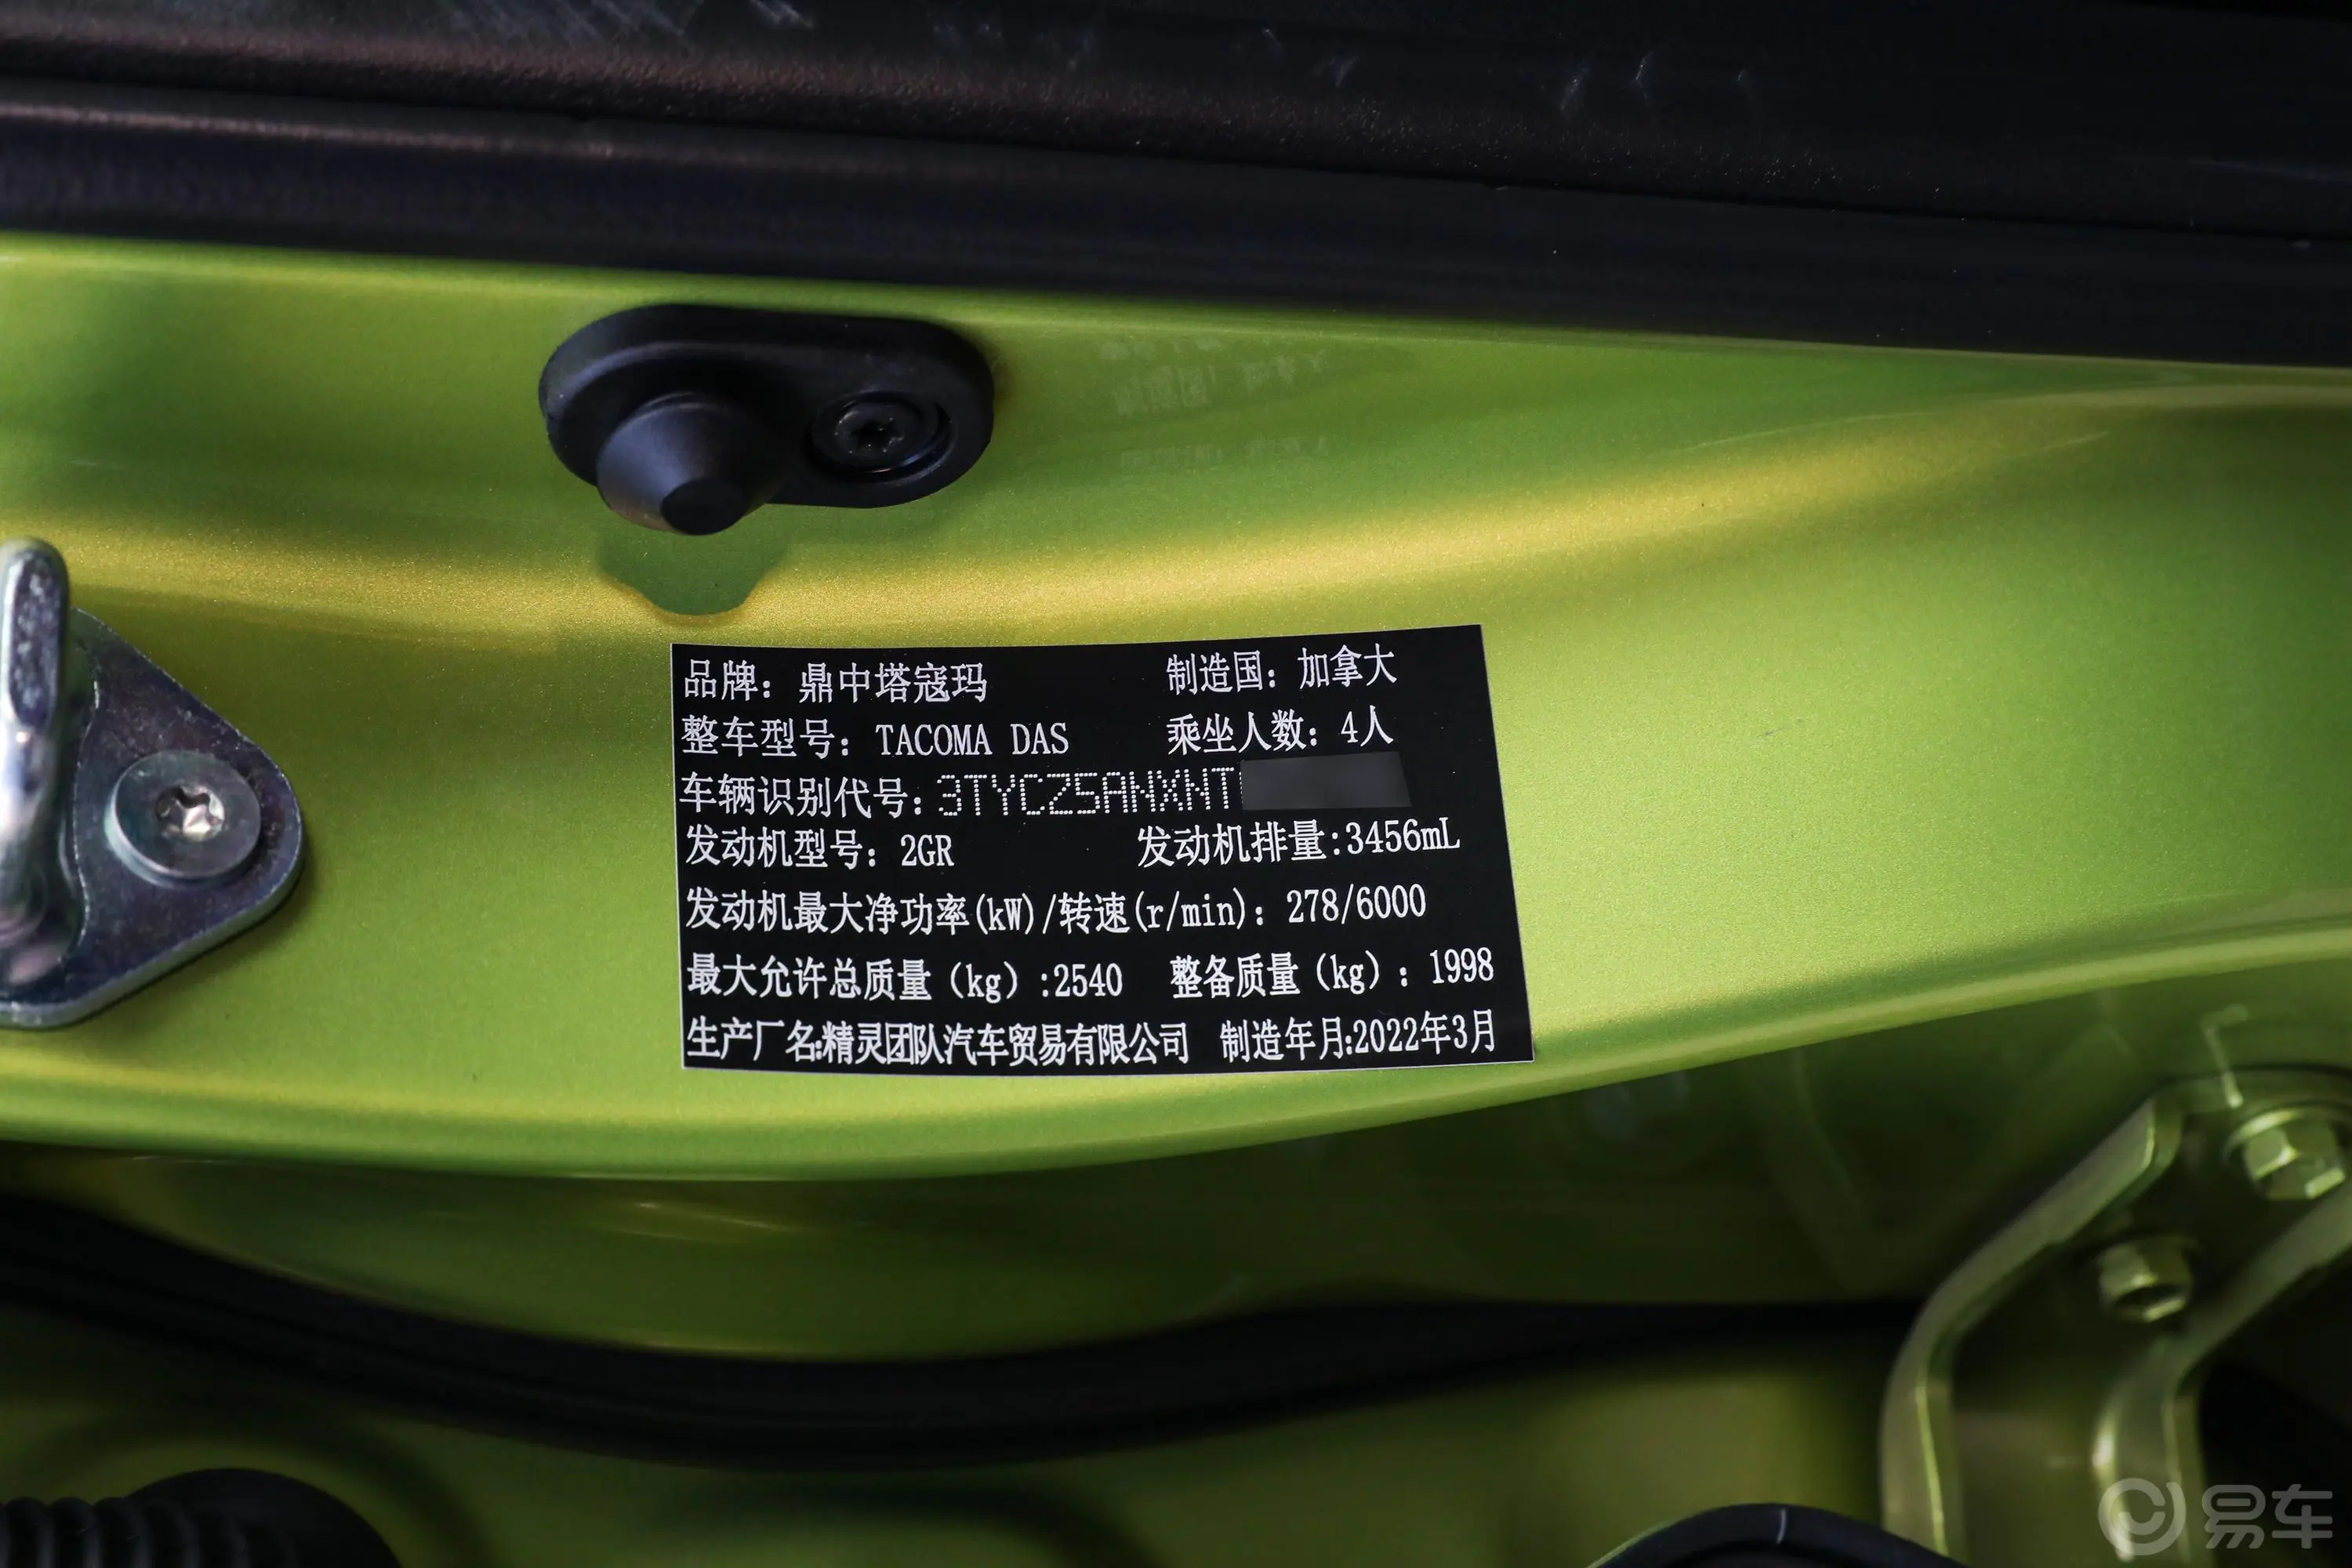 TacomaTRD Pro 3.5L 短轴越野版车辆信息铭牌